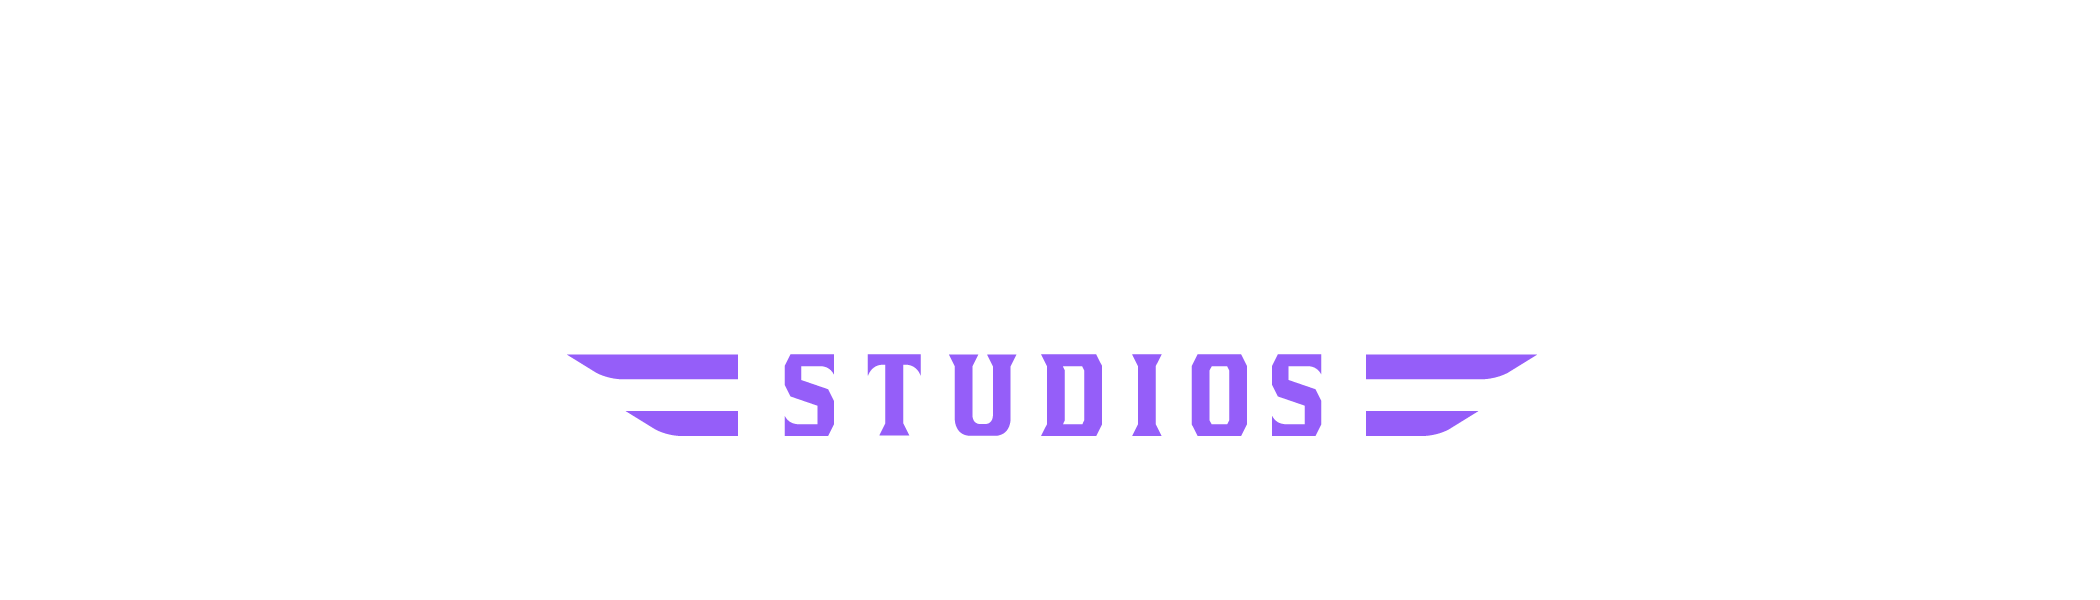 Electric Purple Studios, LLC